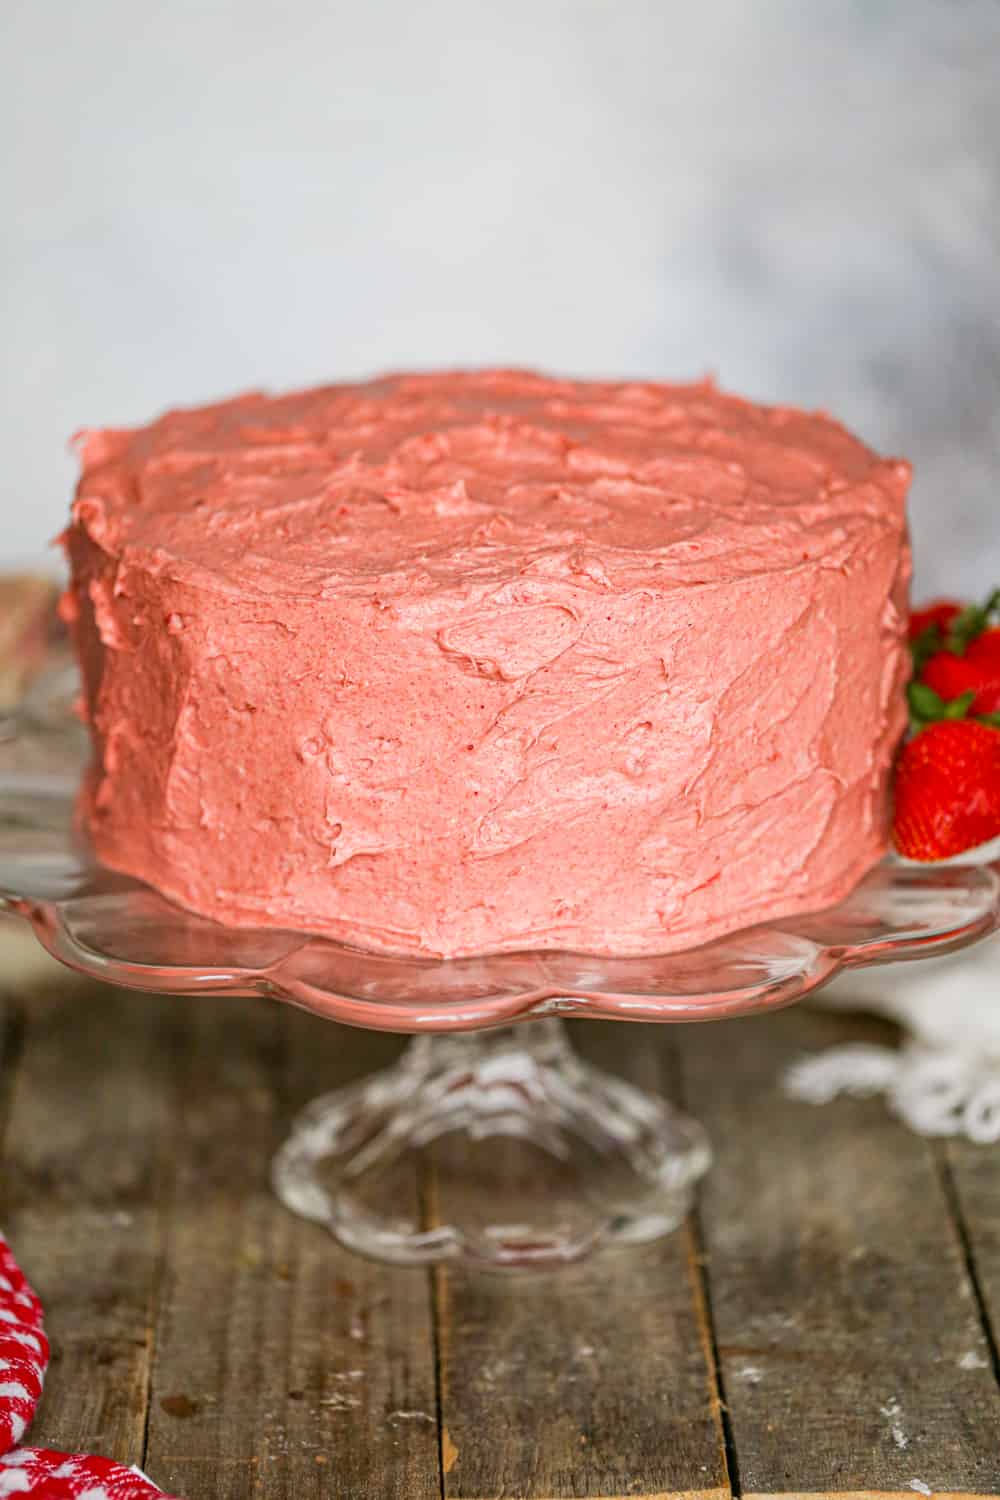 strawberry cake recipe